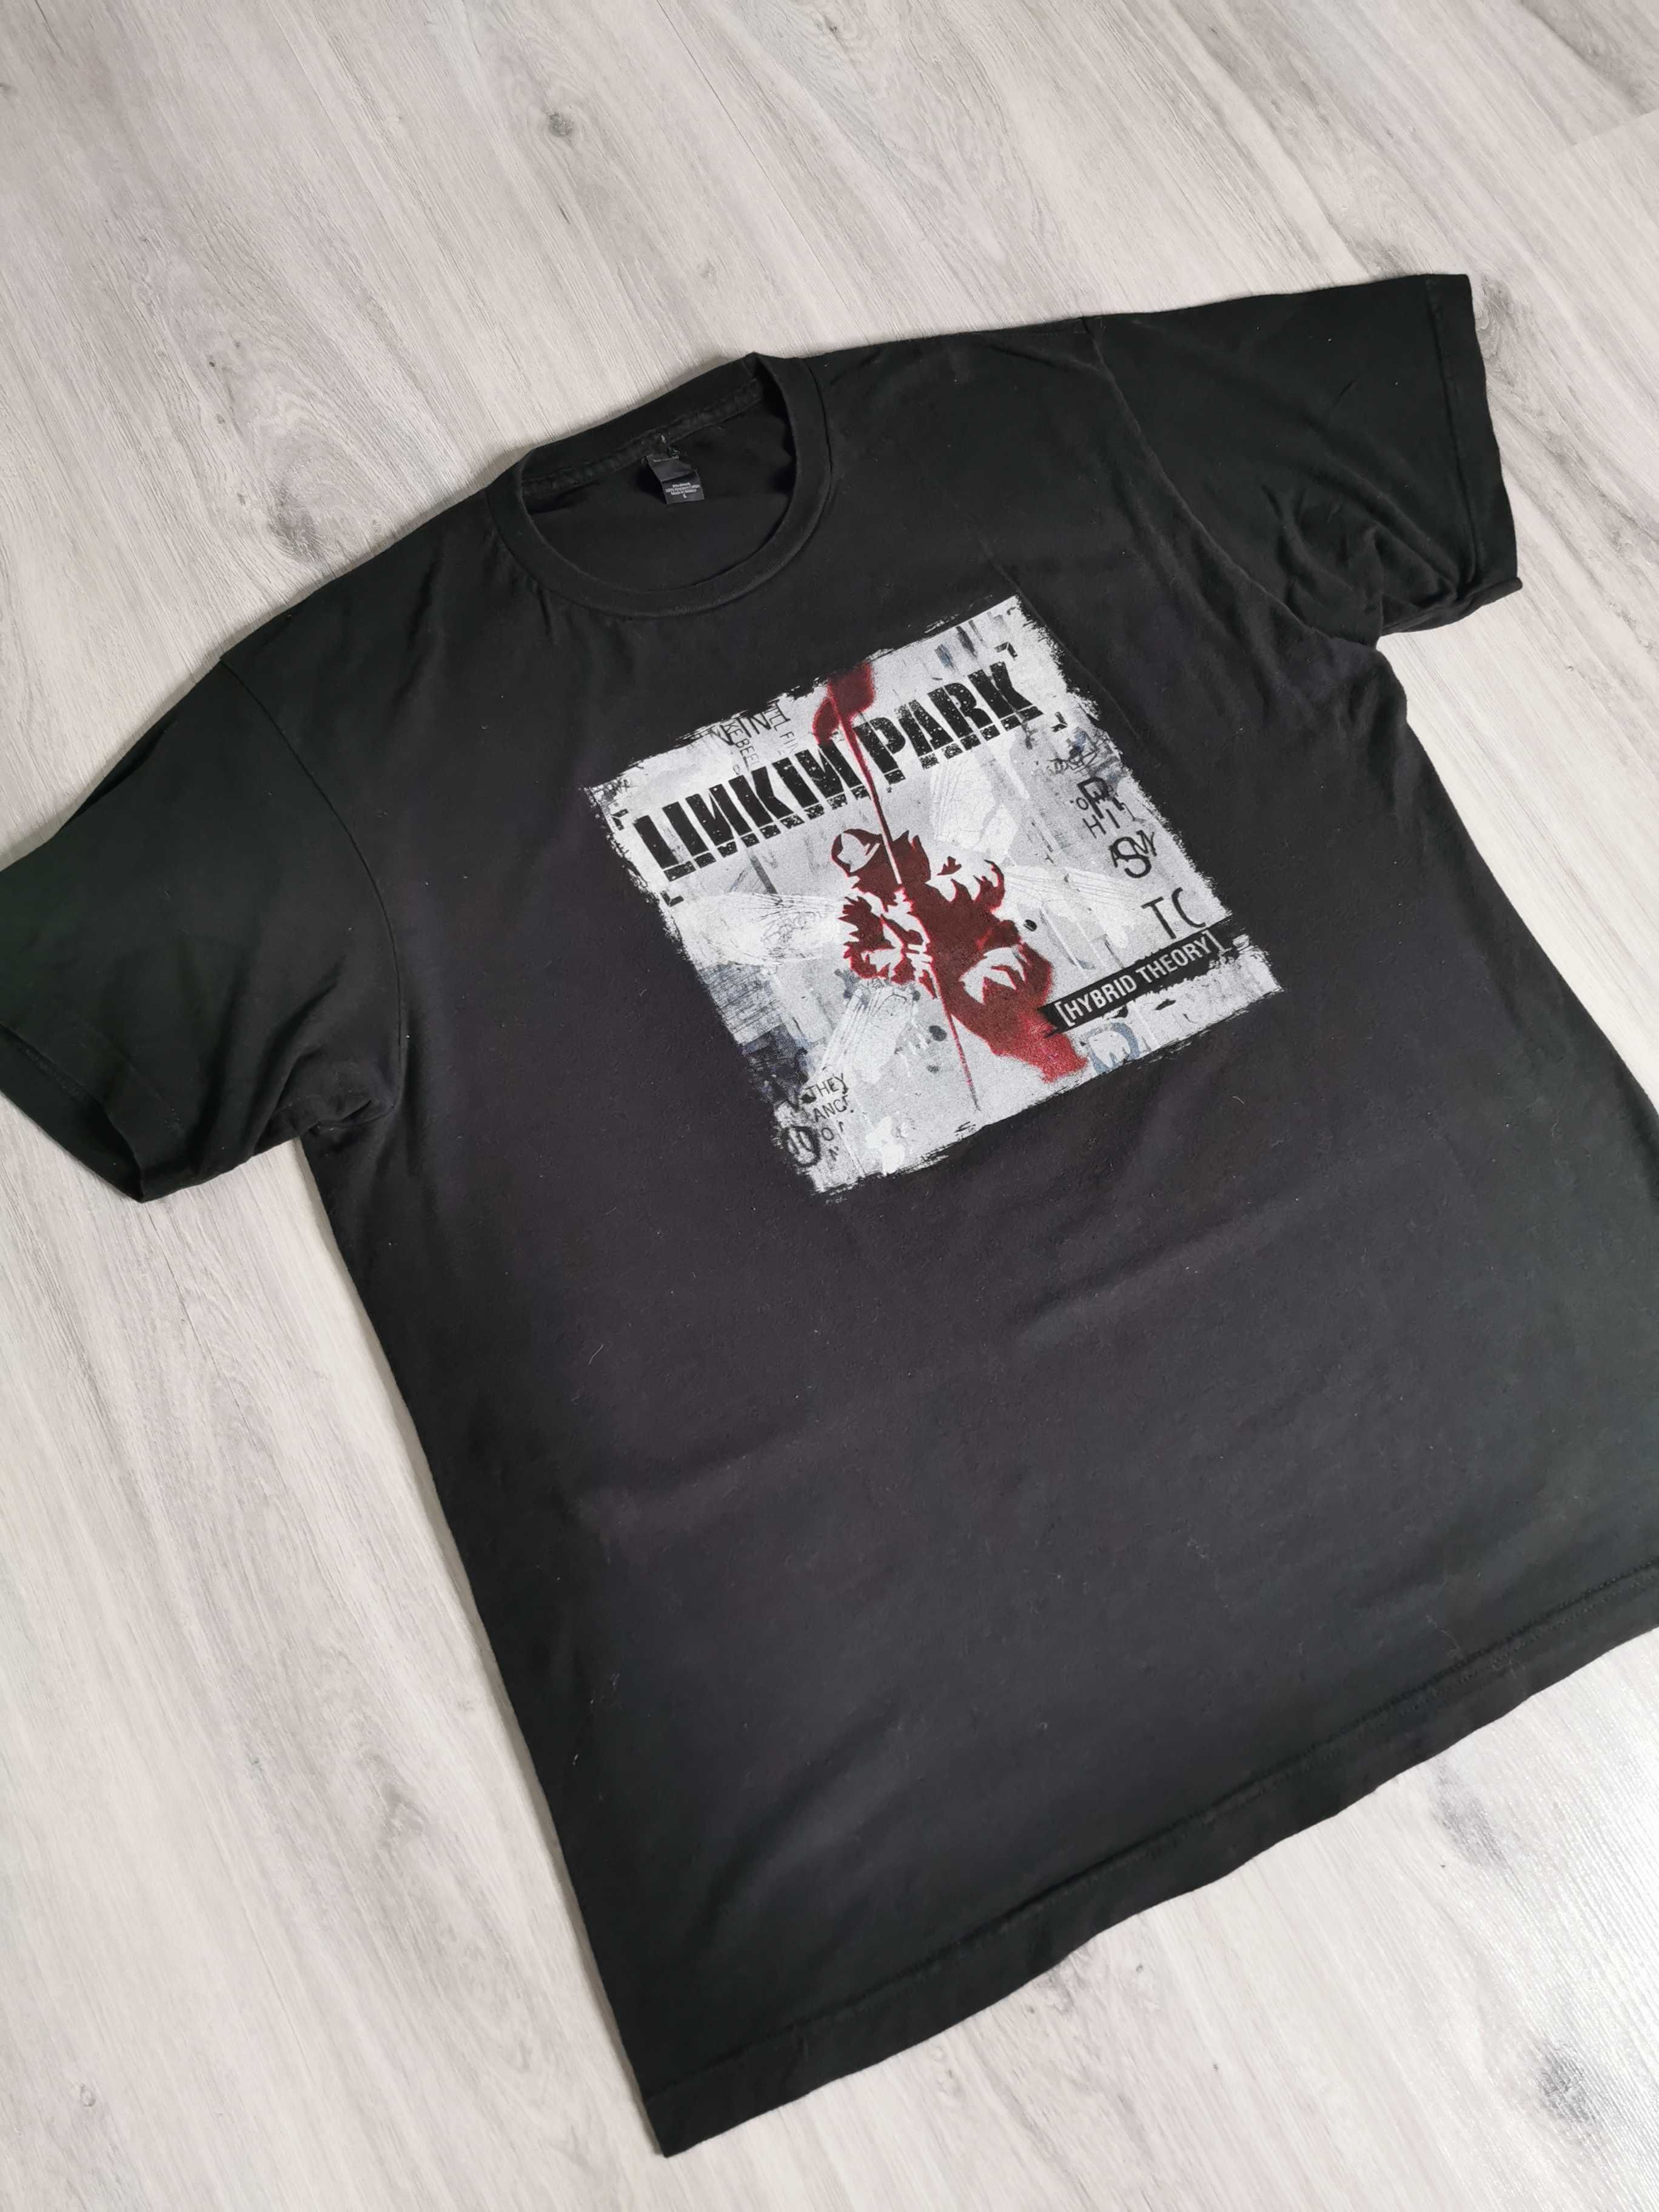 T-shirt zespół Linking Park hybrid theory big print unisex roz L/XL